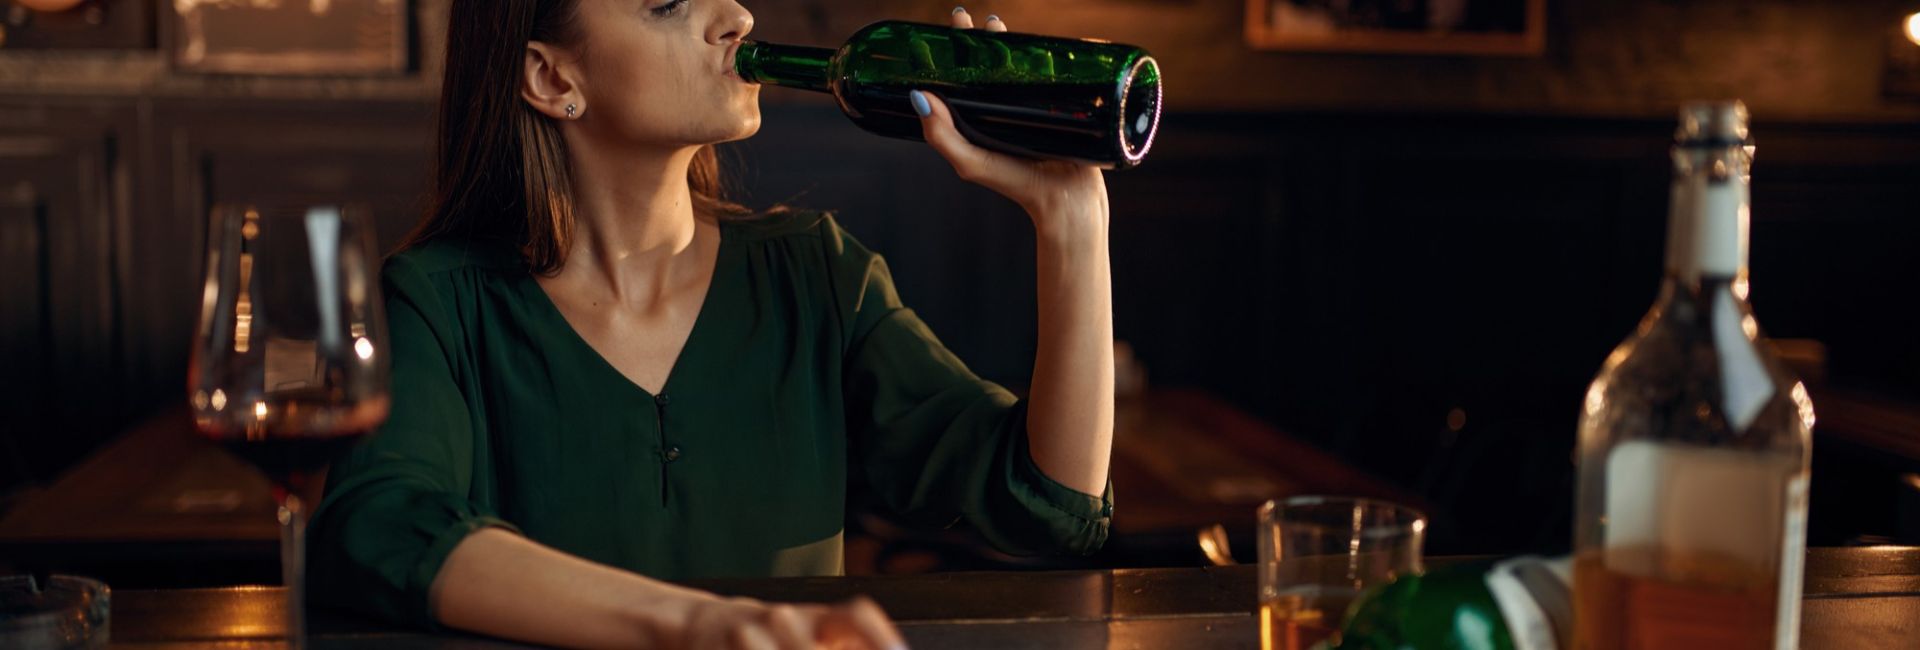 O alcoolismo feminino: sintomas e tratamento